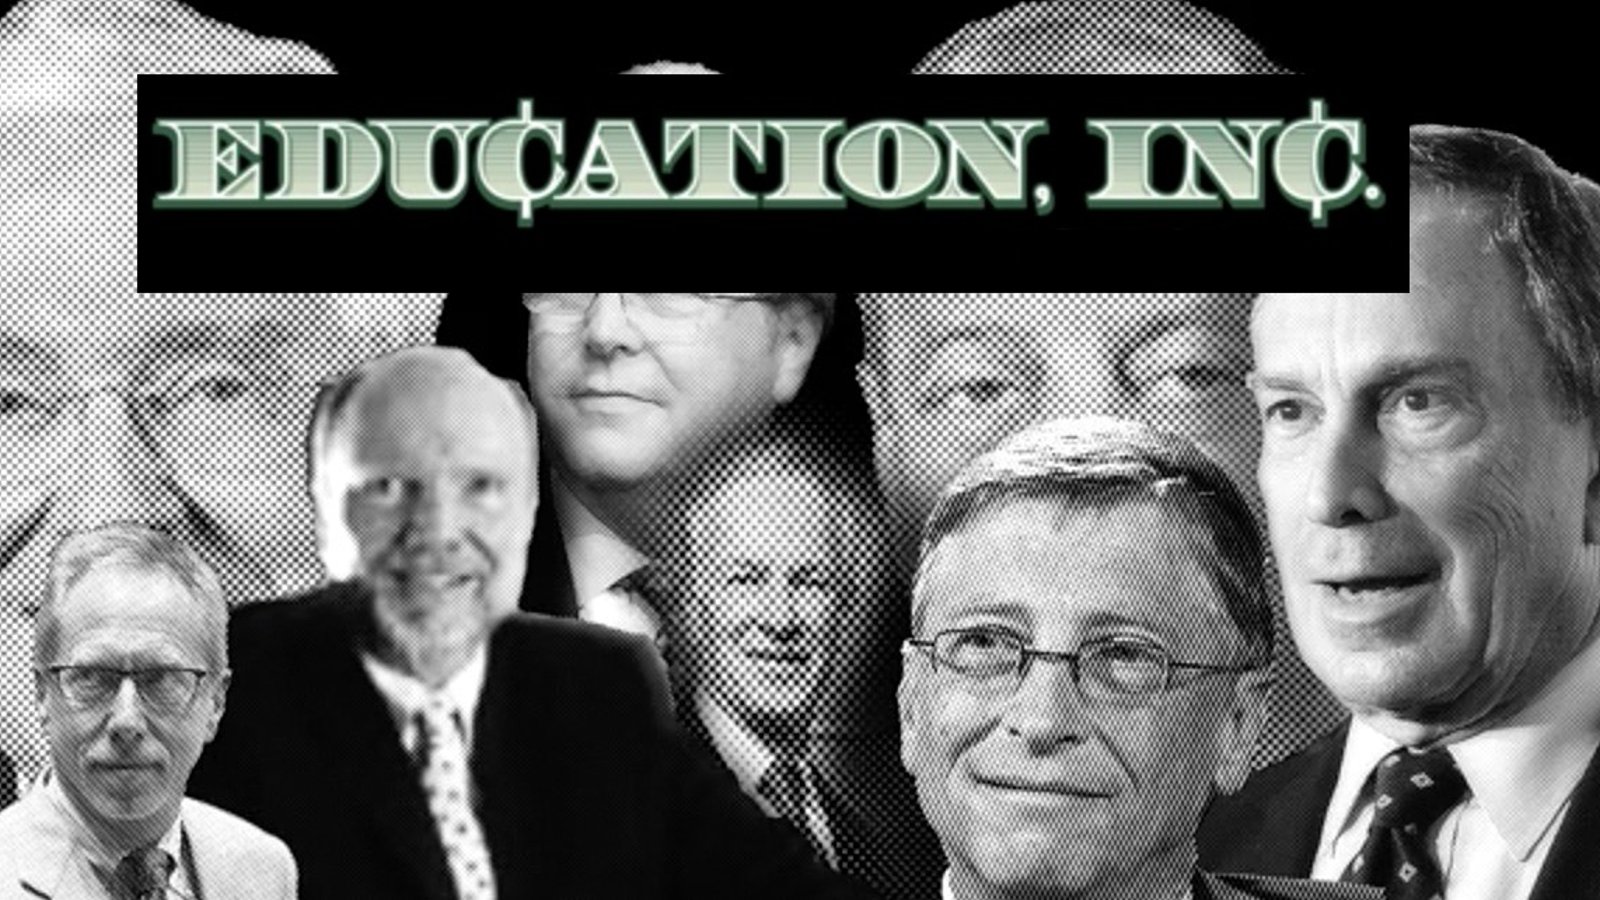 Education Inc. - The Privatization of American Public Education